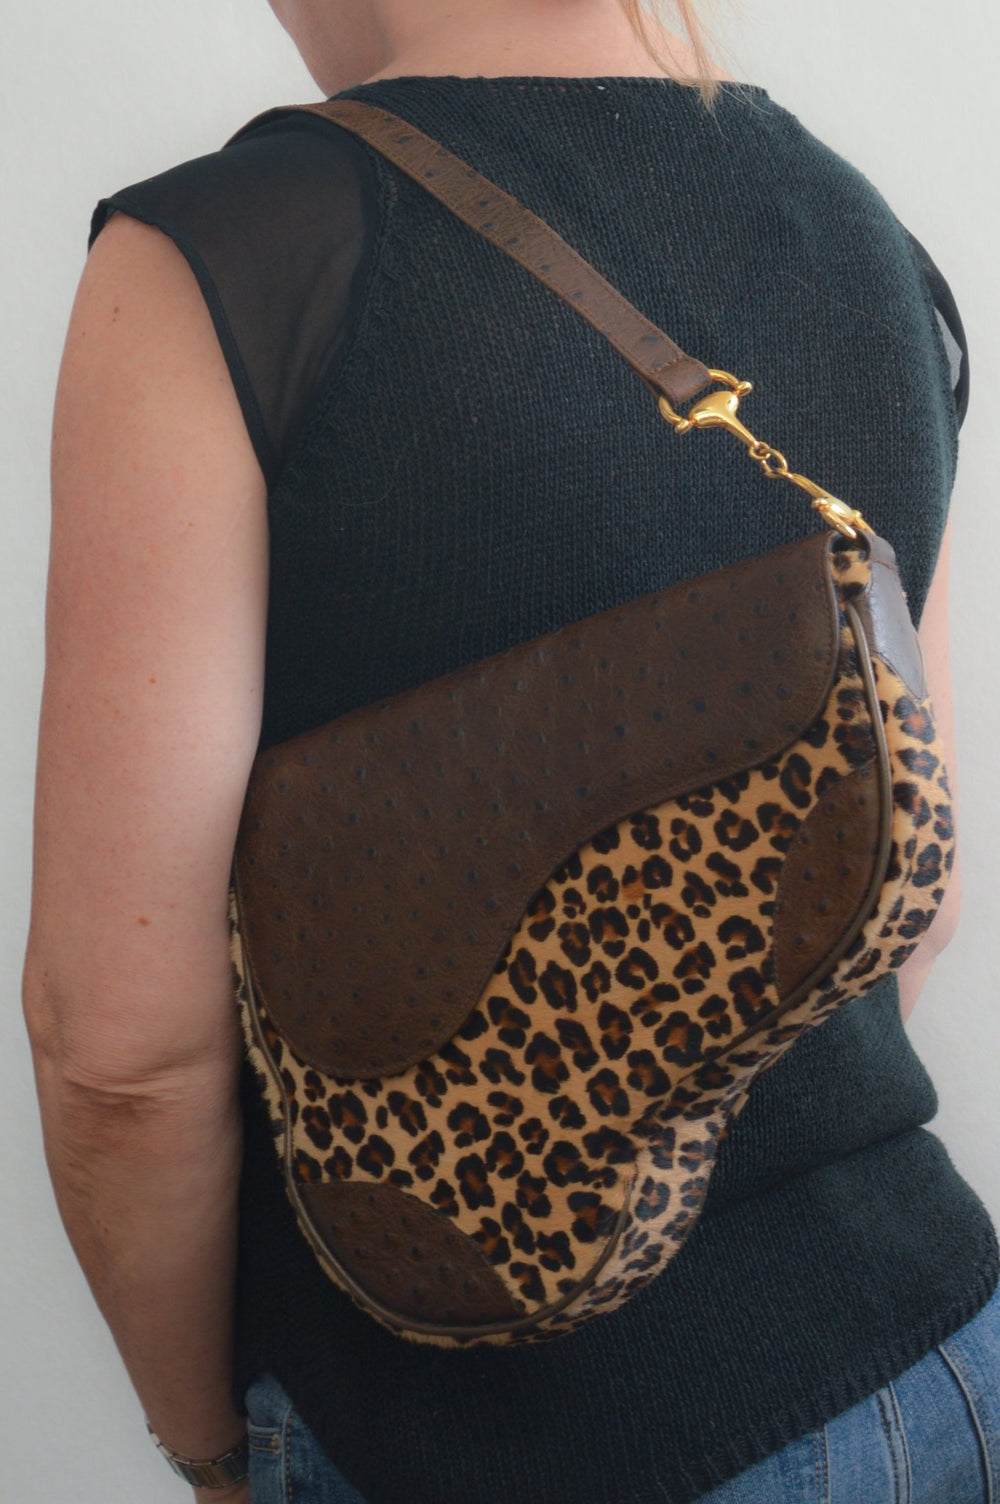 CM42 Baby Leopard - Carla Mancini Handbags